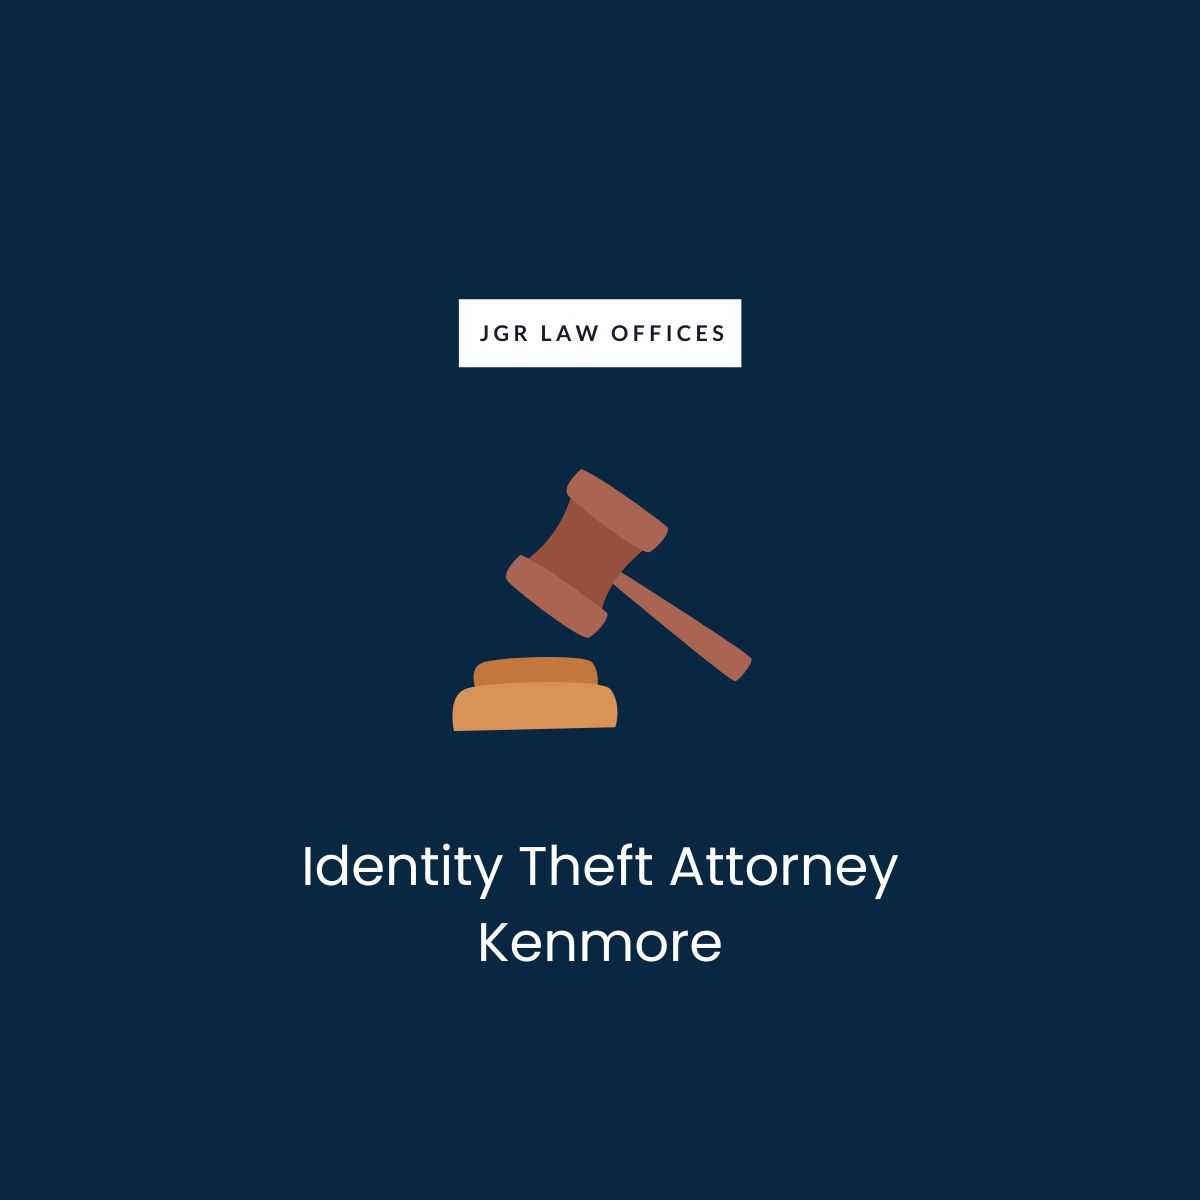 Identity Theft Attorney Kenmore Identity Theft Identity Theft